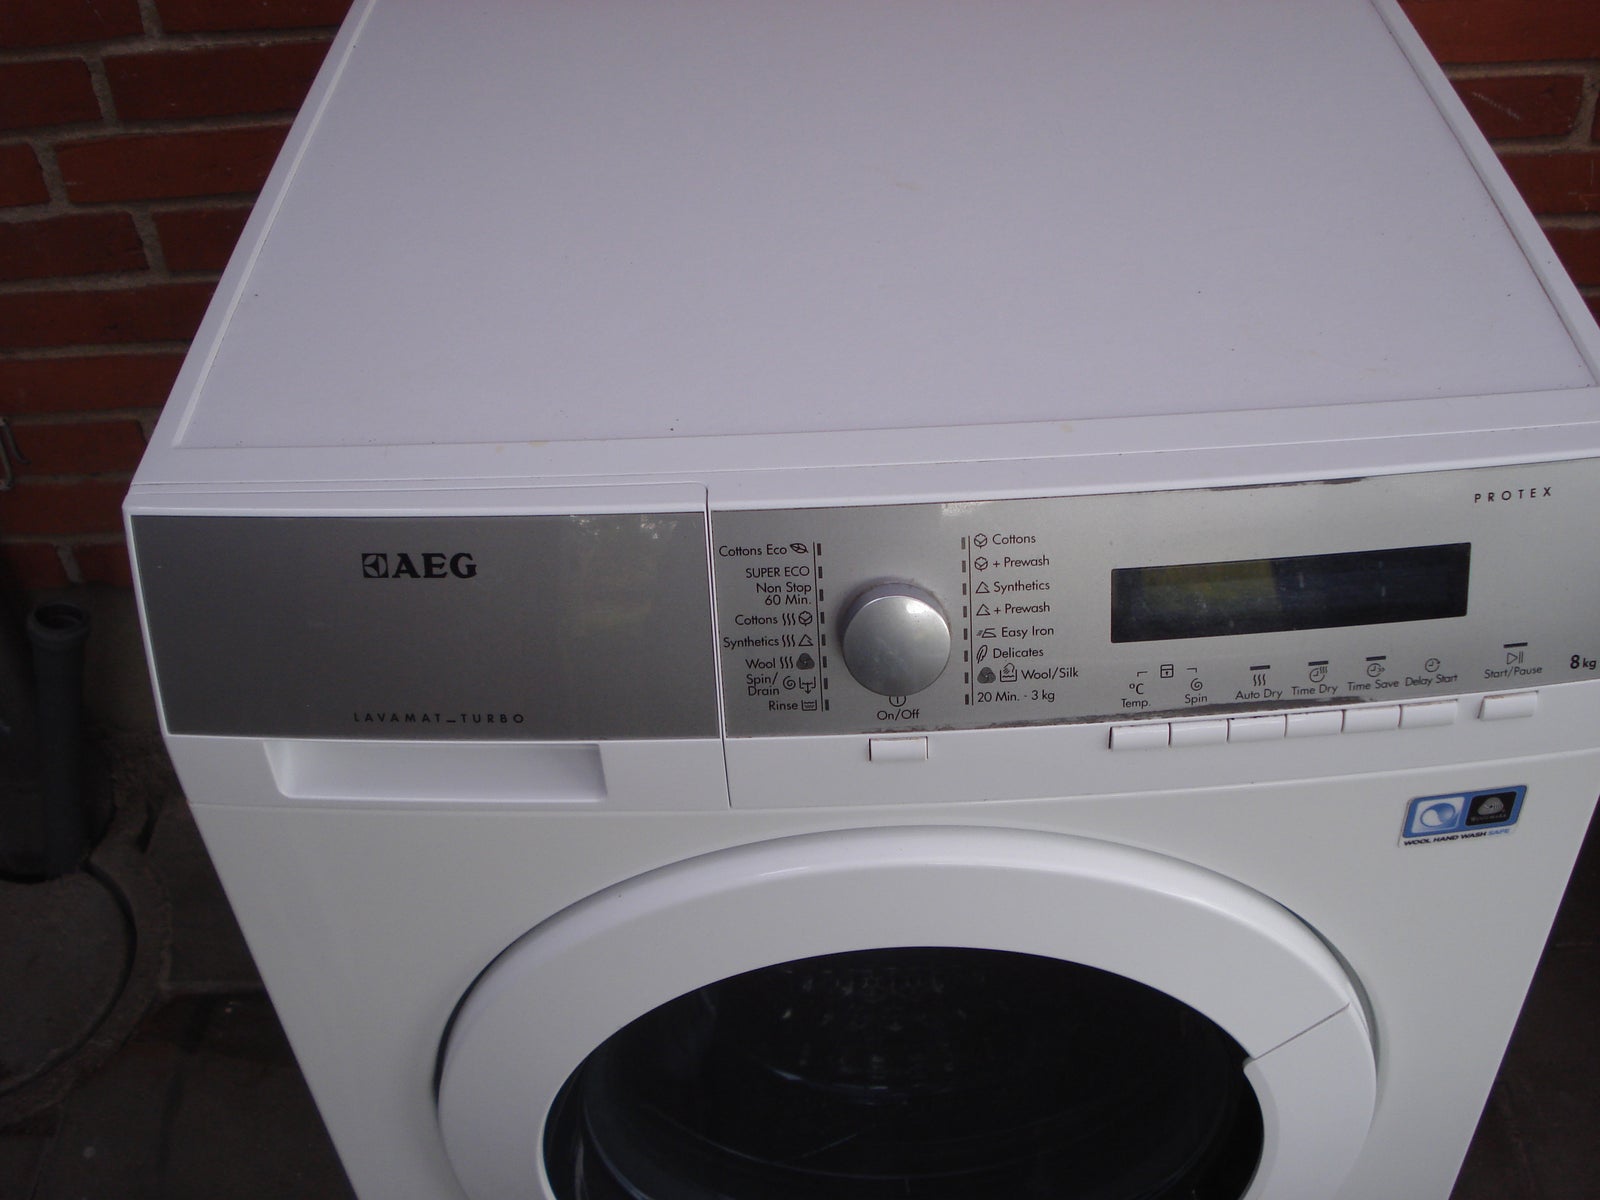 AEG vaskemaskine, L77685WD, vaske/tørremaskine